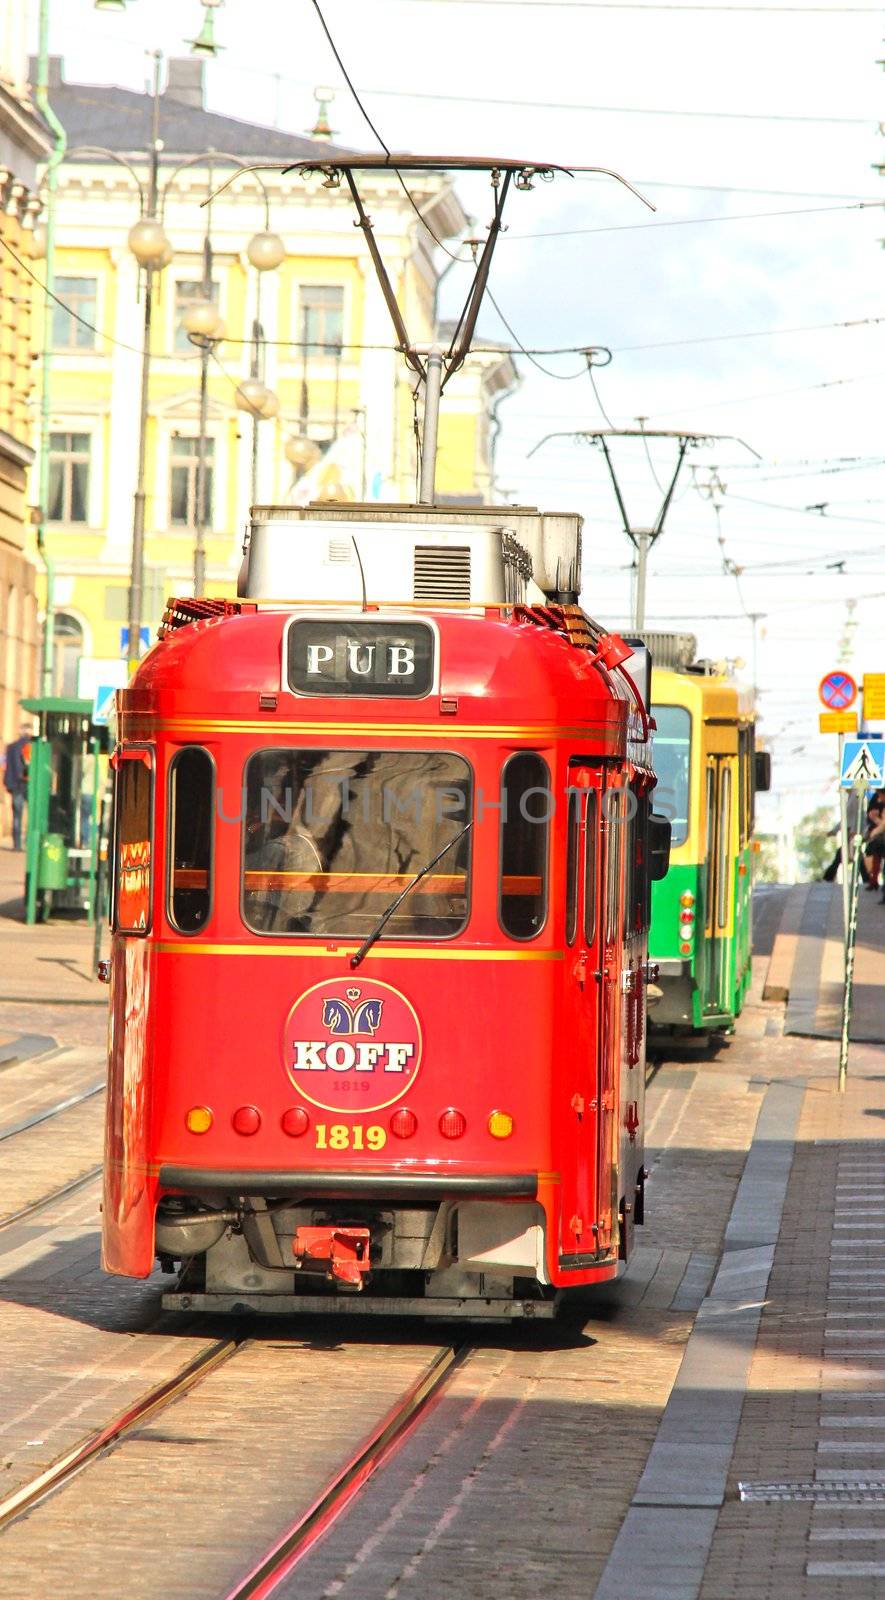 Red pub tram in the capital of Finland, Helsinki by Arvebettum